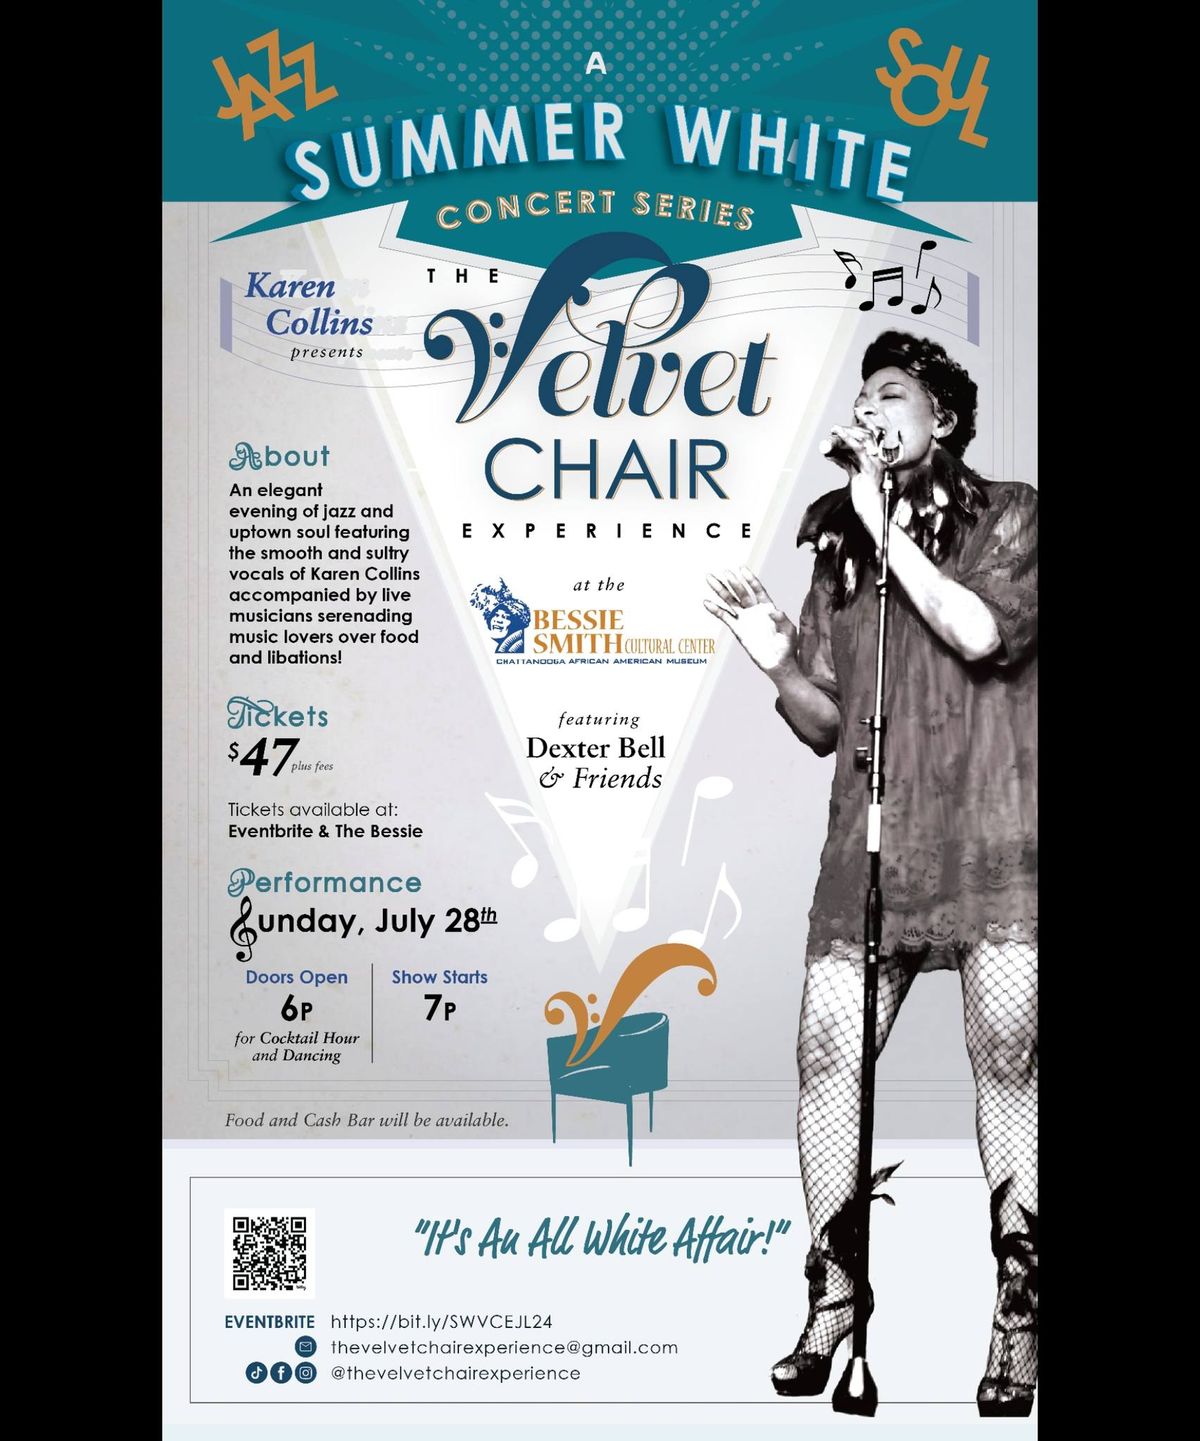 Karen Collins Presents:A Summer White Velvet Chair Experience at the Bessie